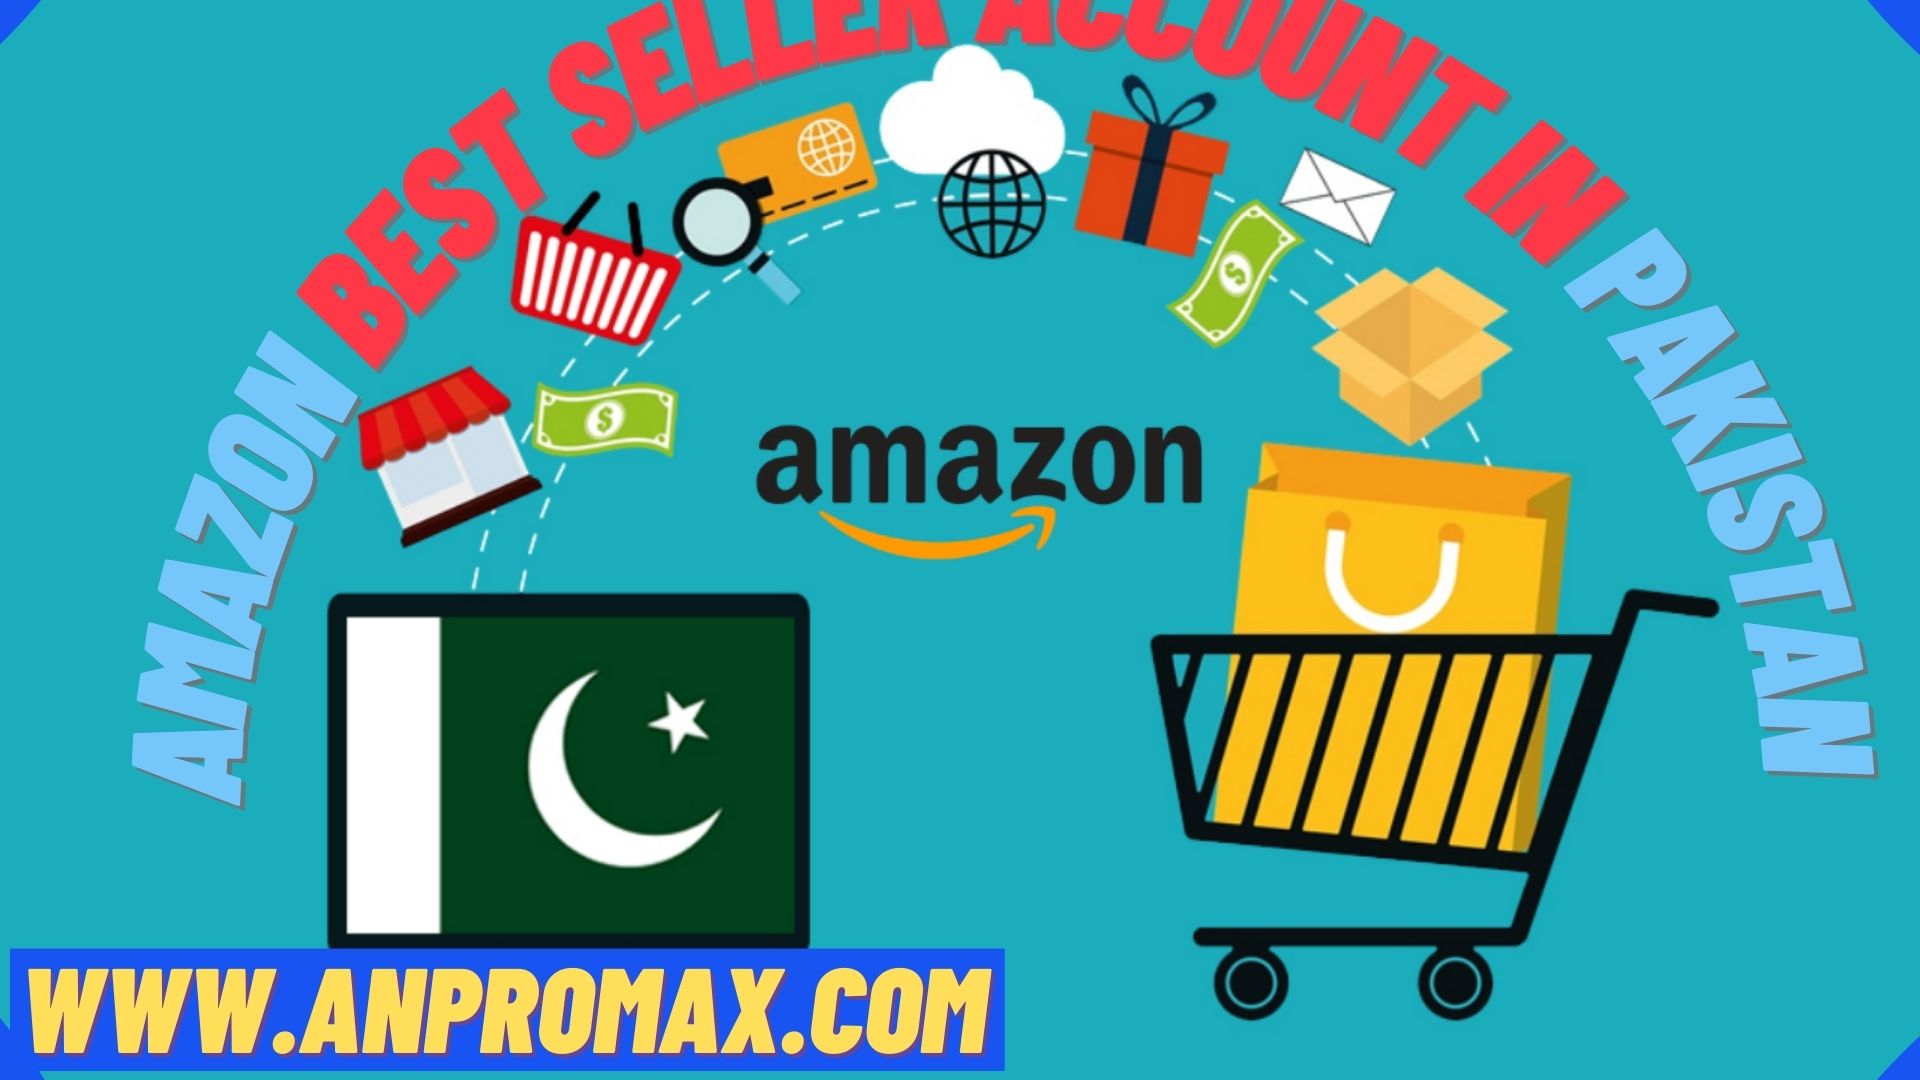 Amazon Best Seller Account in Pakistan